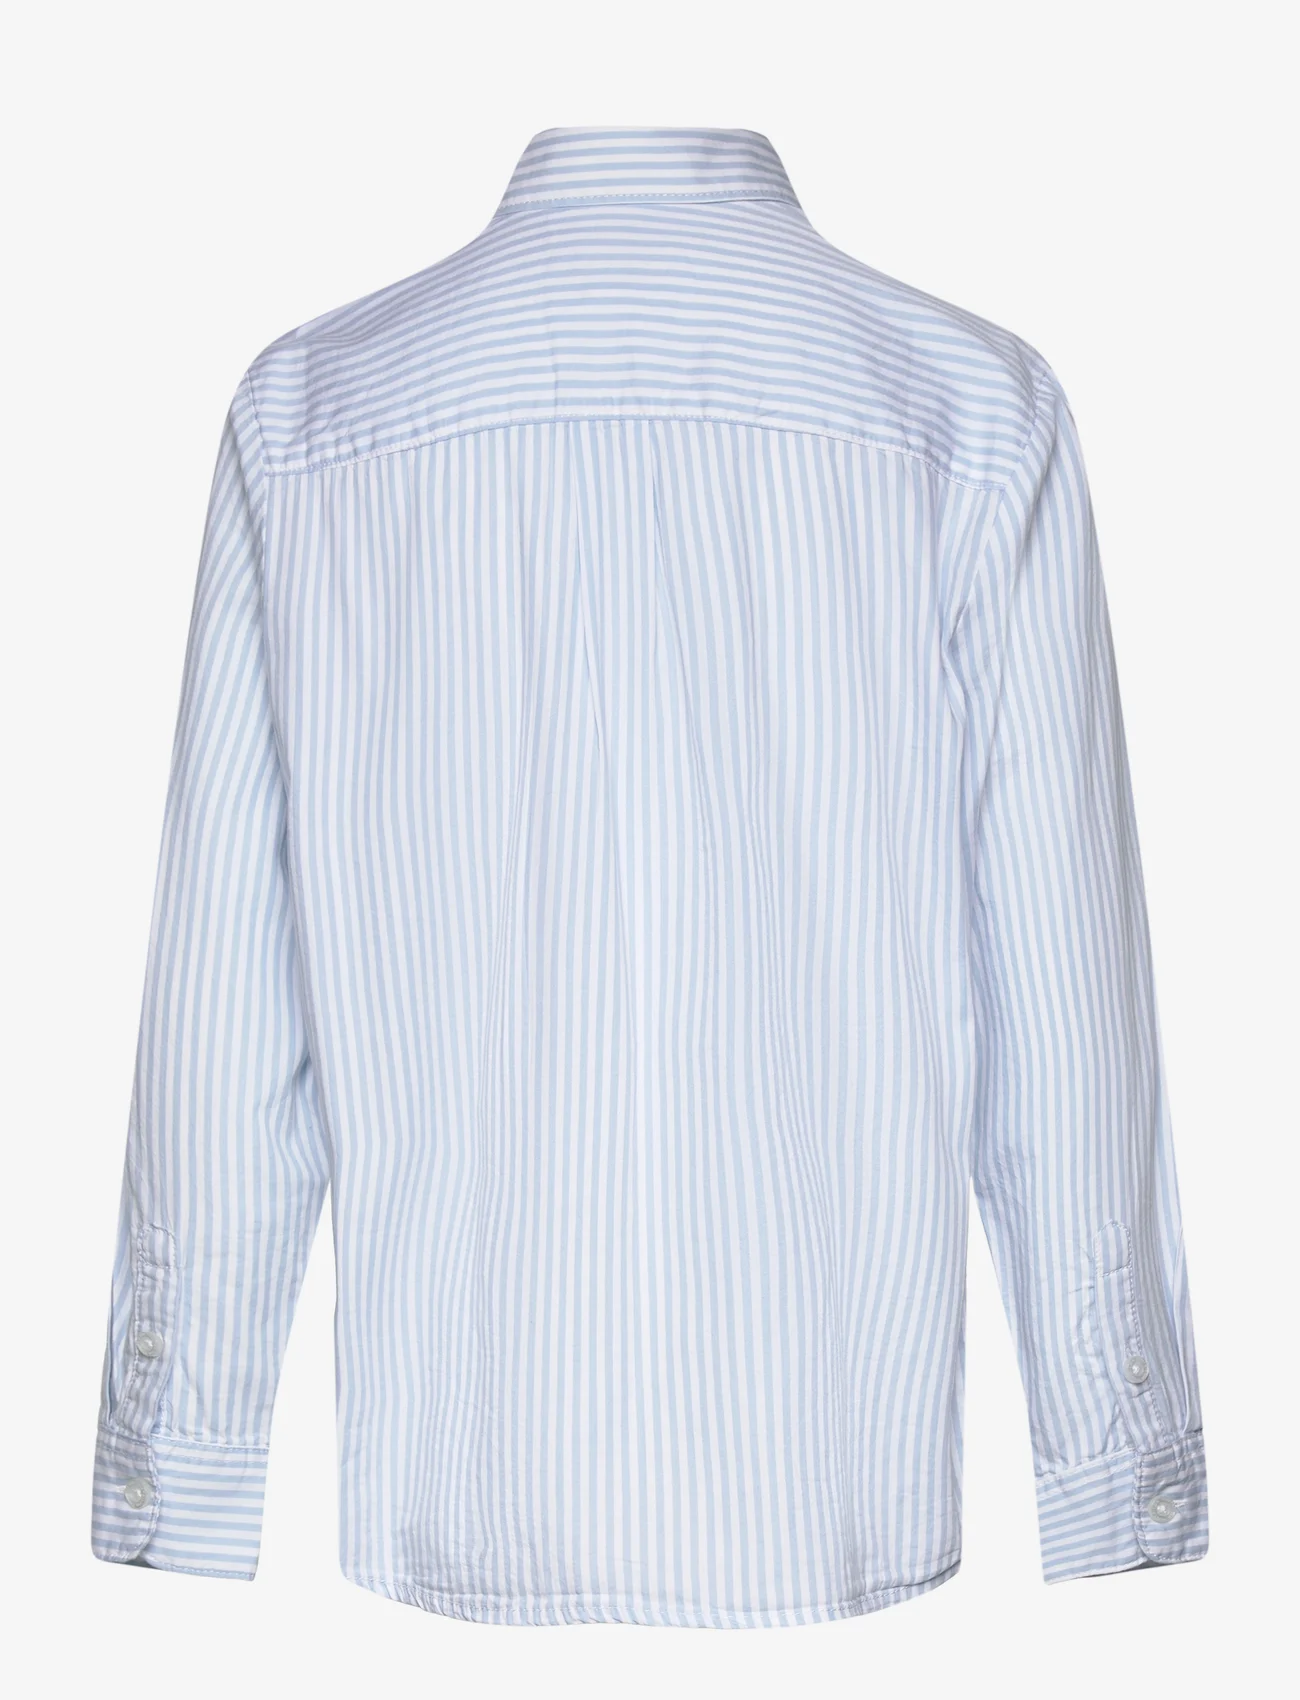 Tom Tailor - striped shirt - long-sleeved shirts - blue white stripe - 1